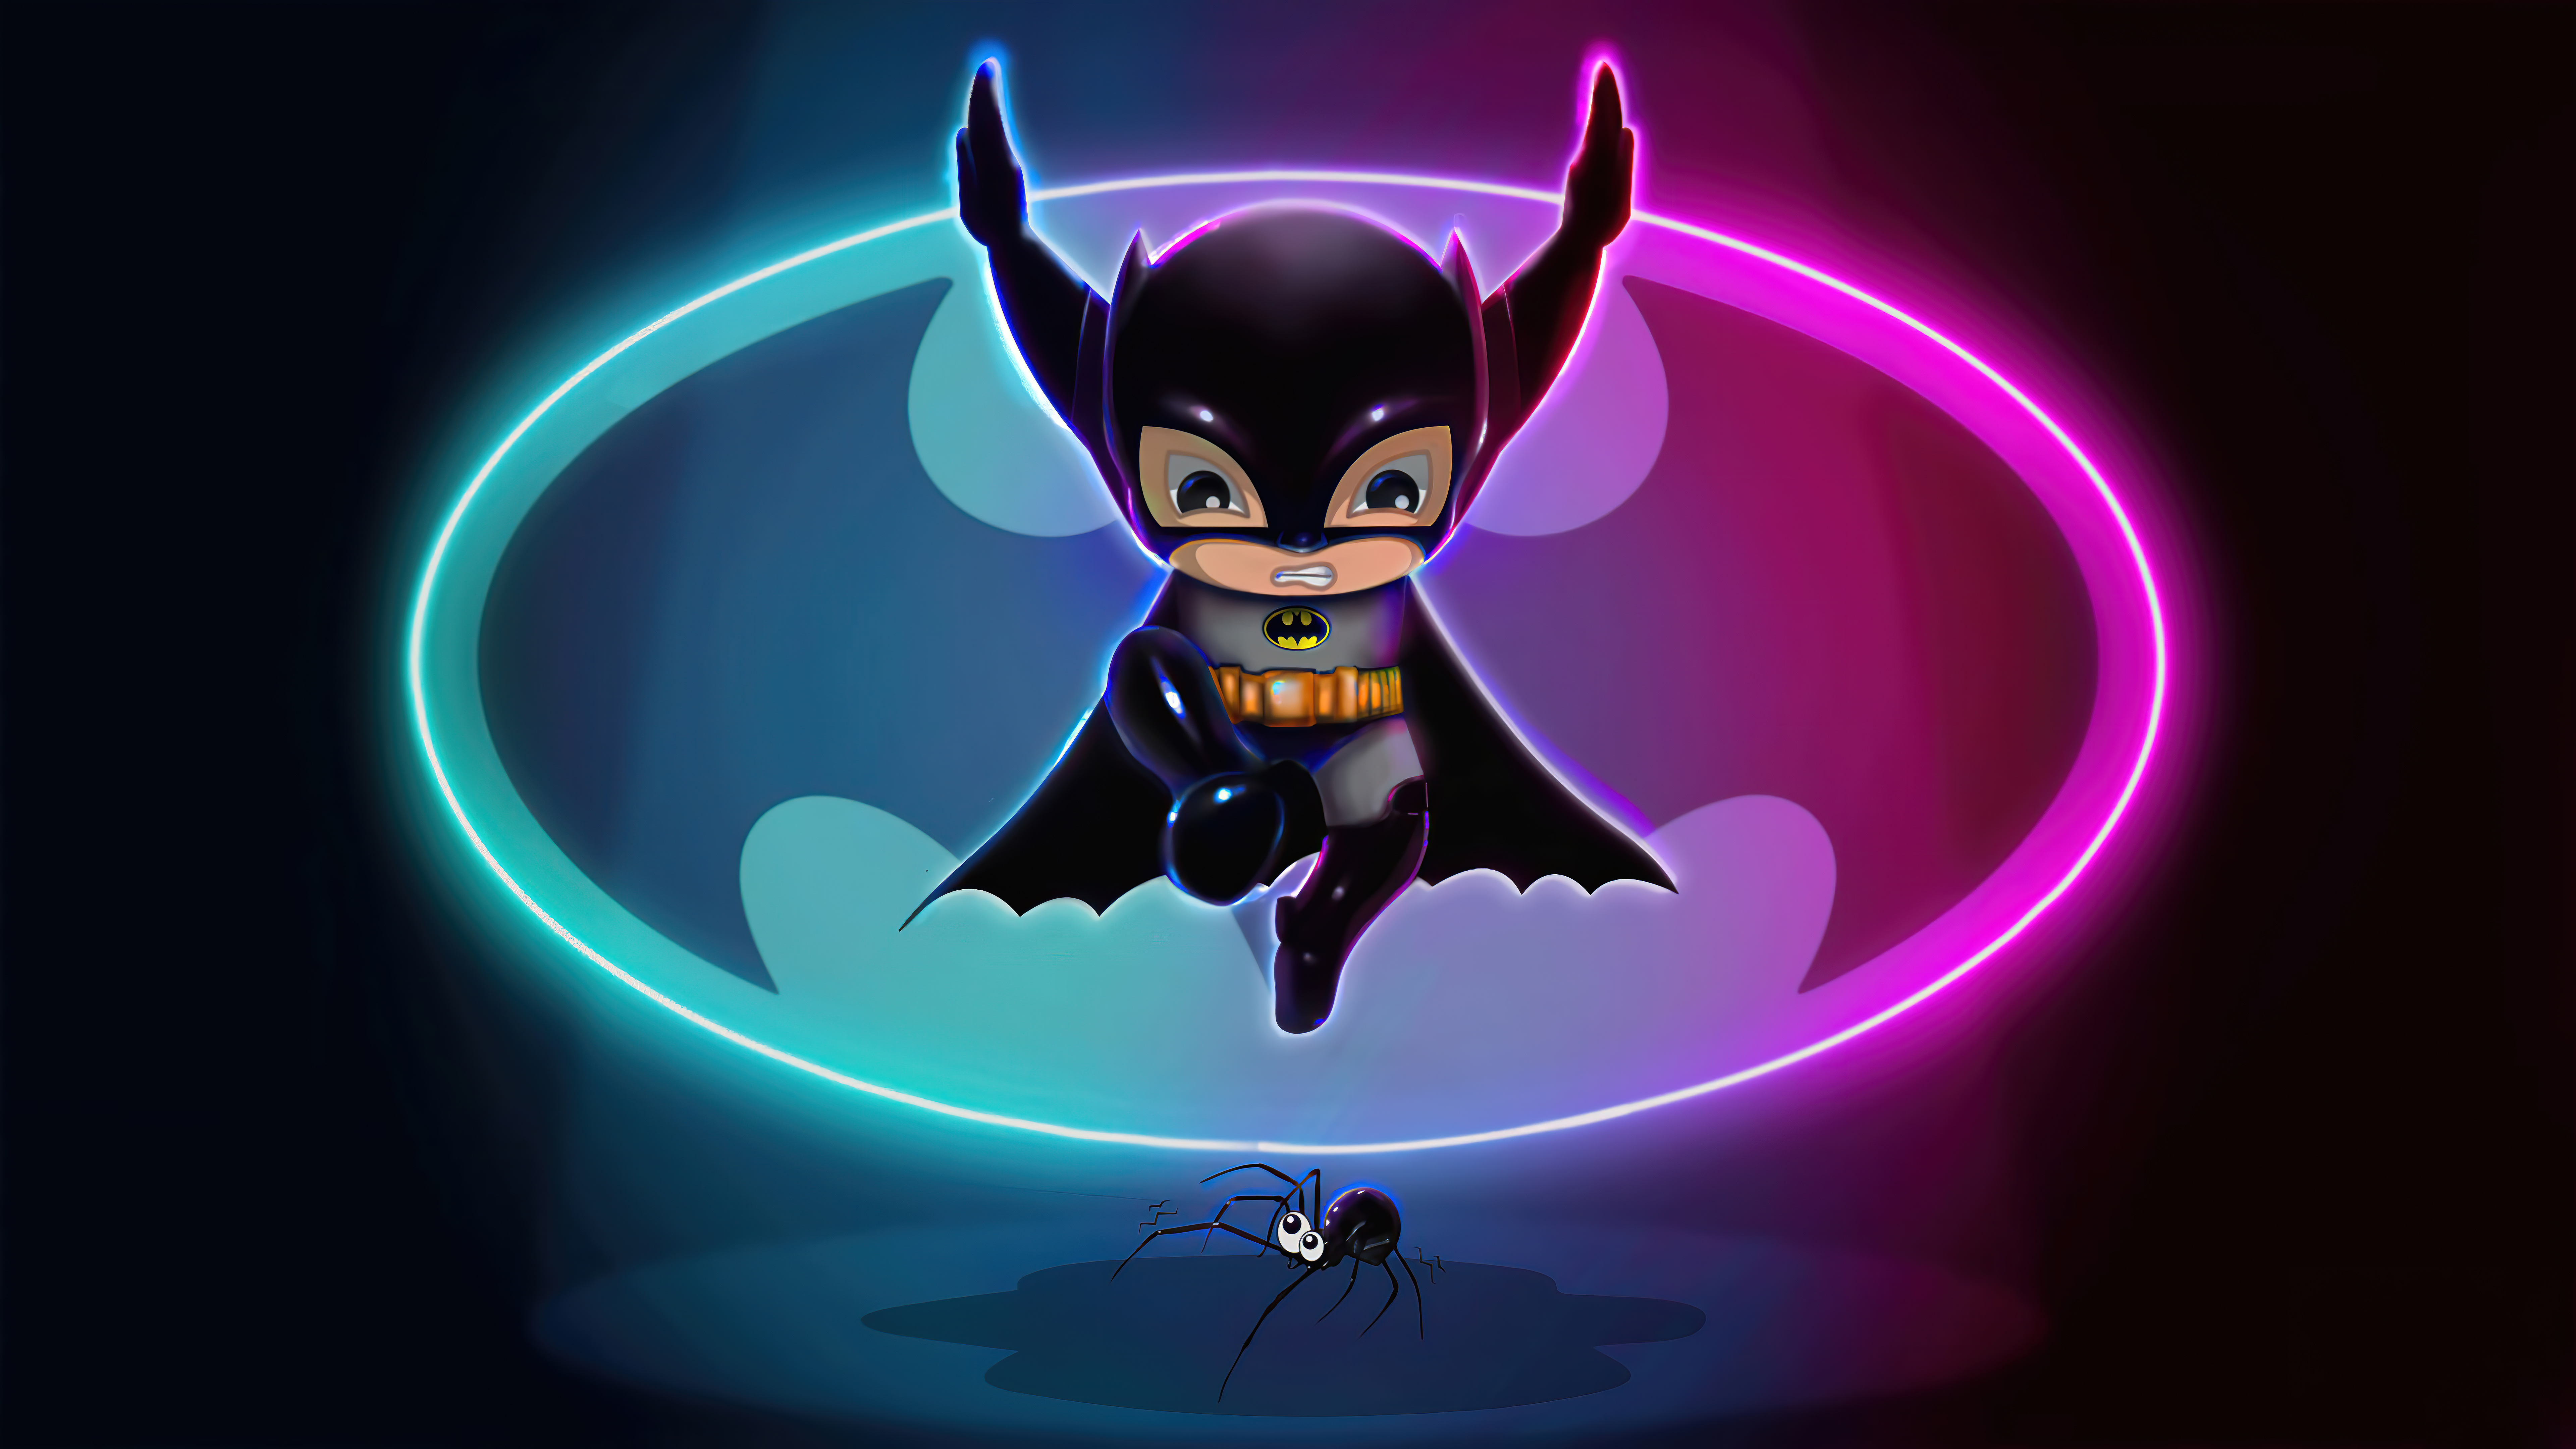 Batman illustration with neon lights Wallpaper 8k Ultra HD ID:8175